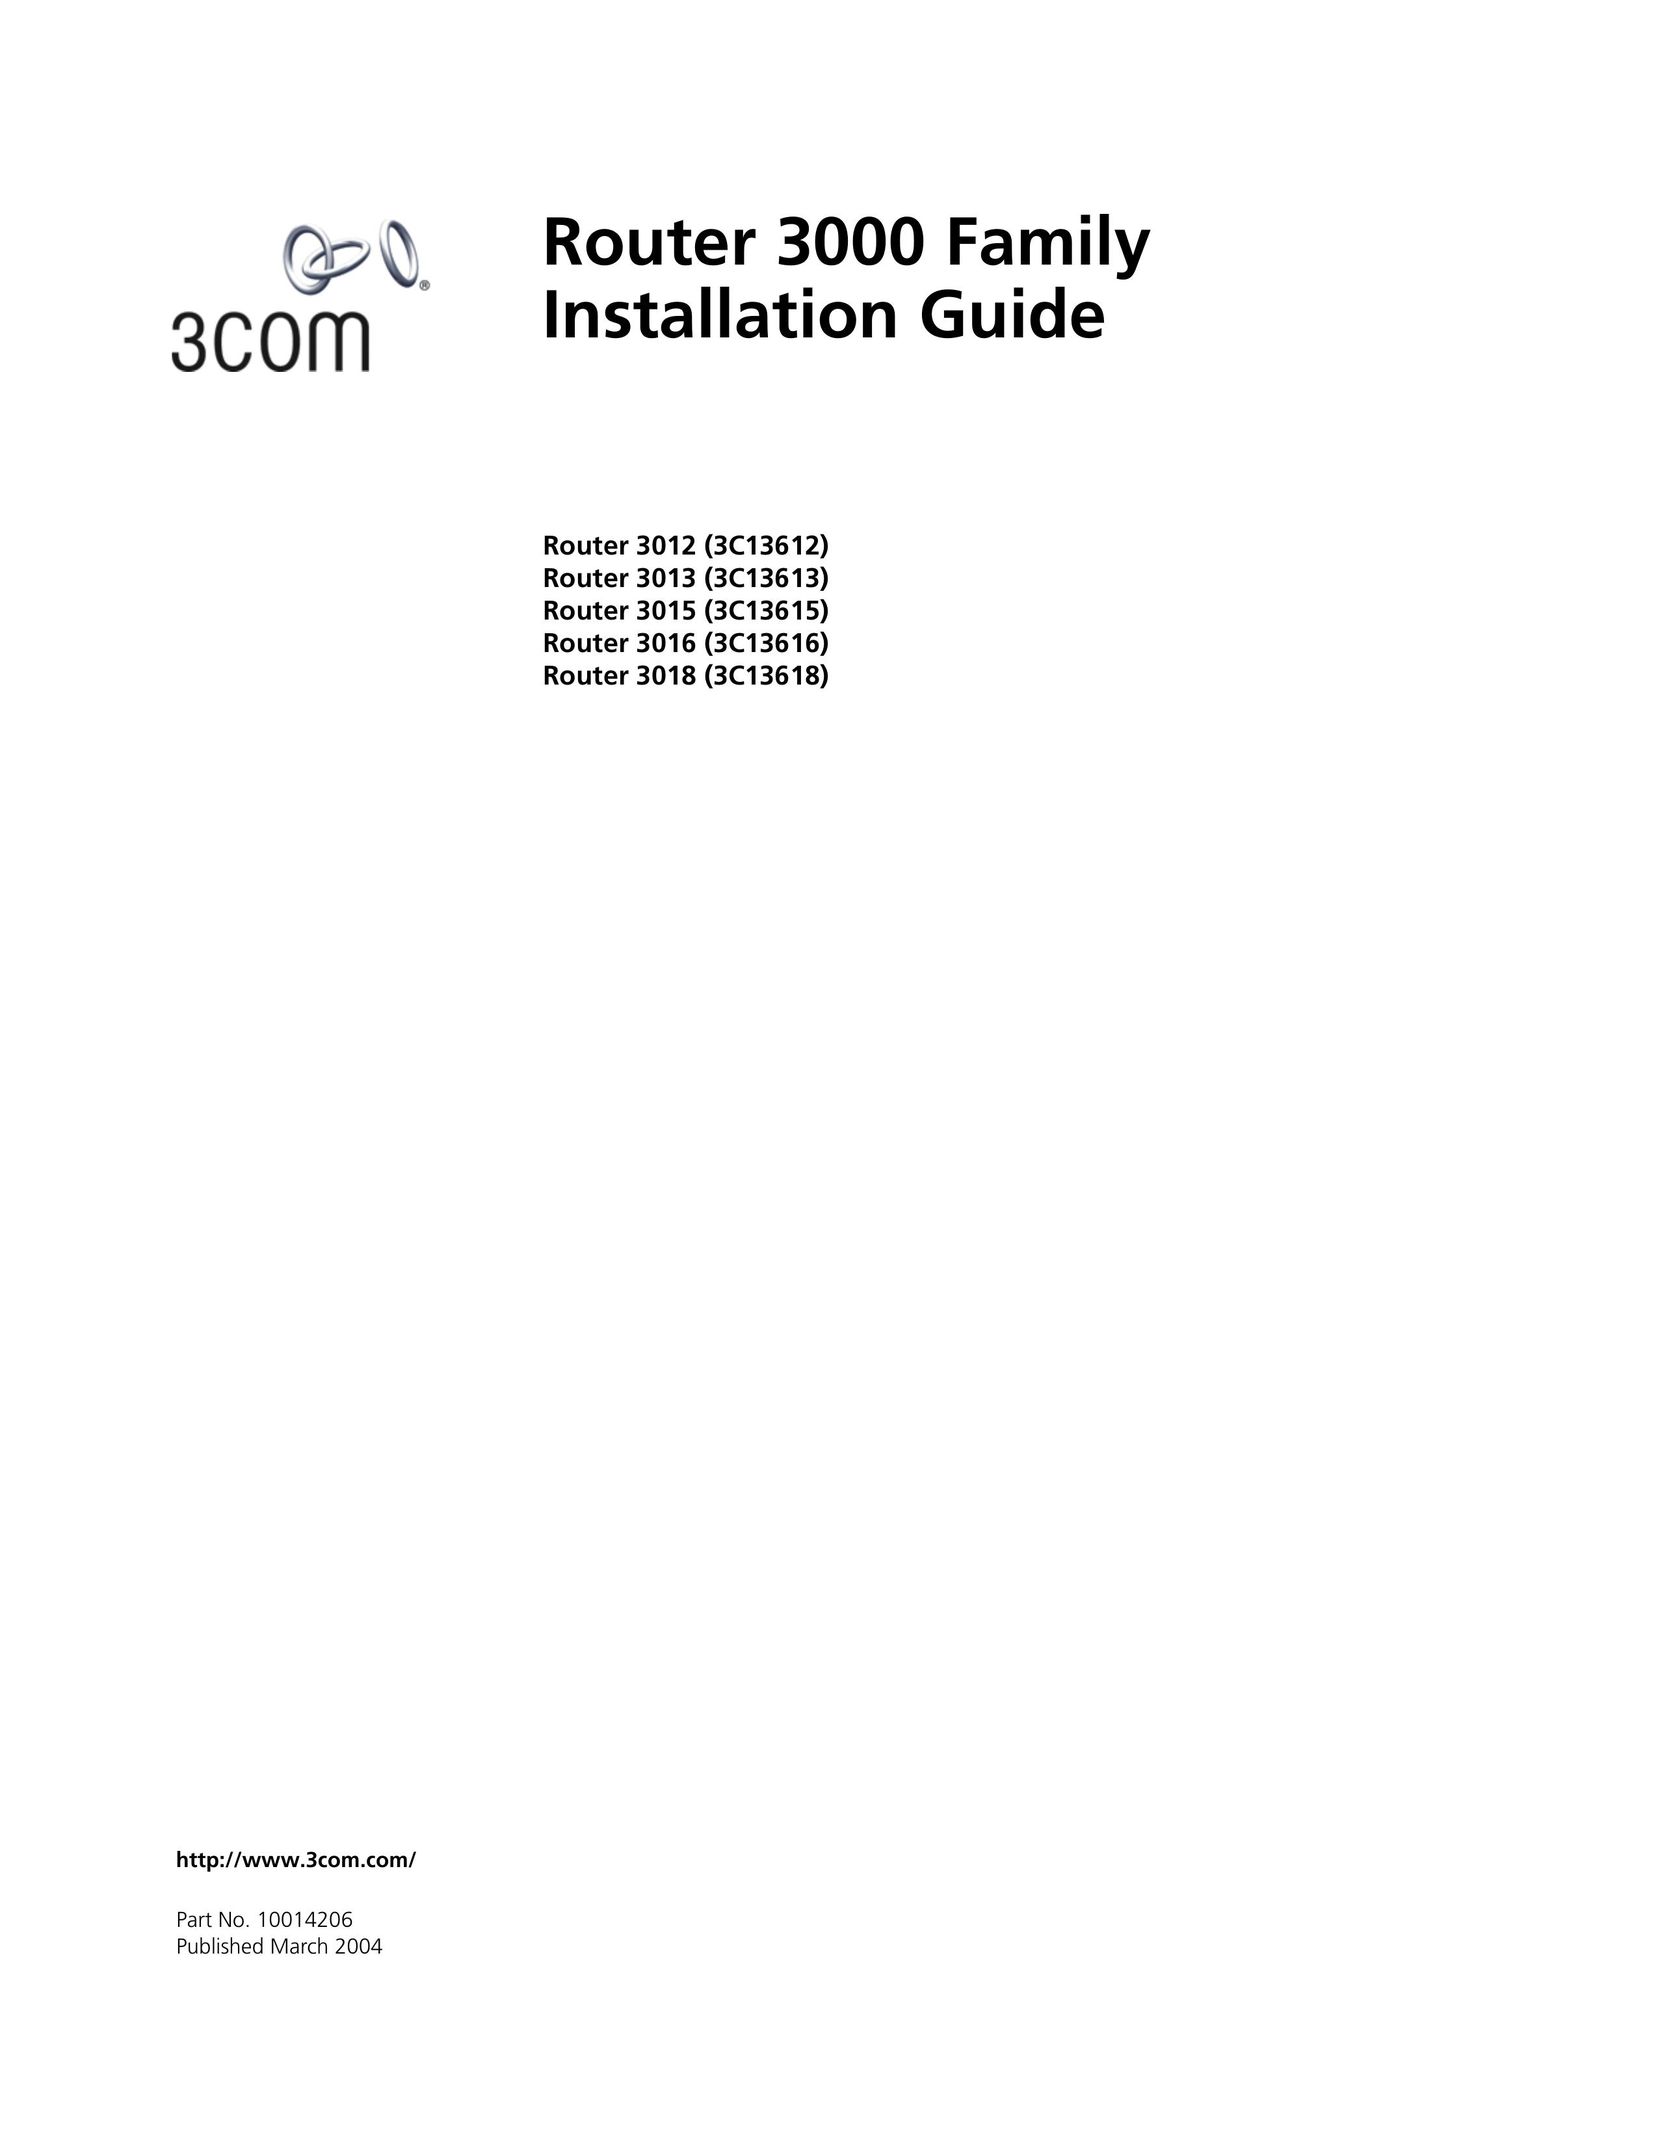 3Com 3018 (3C13618) Saw User Manual